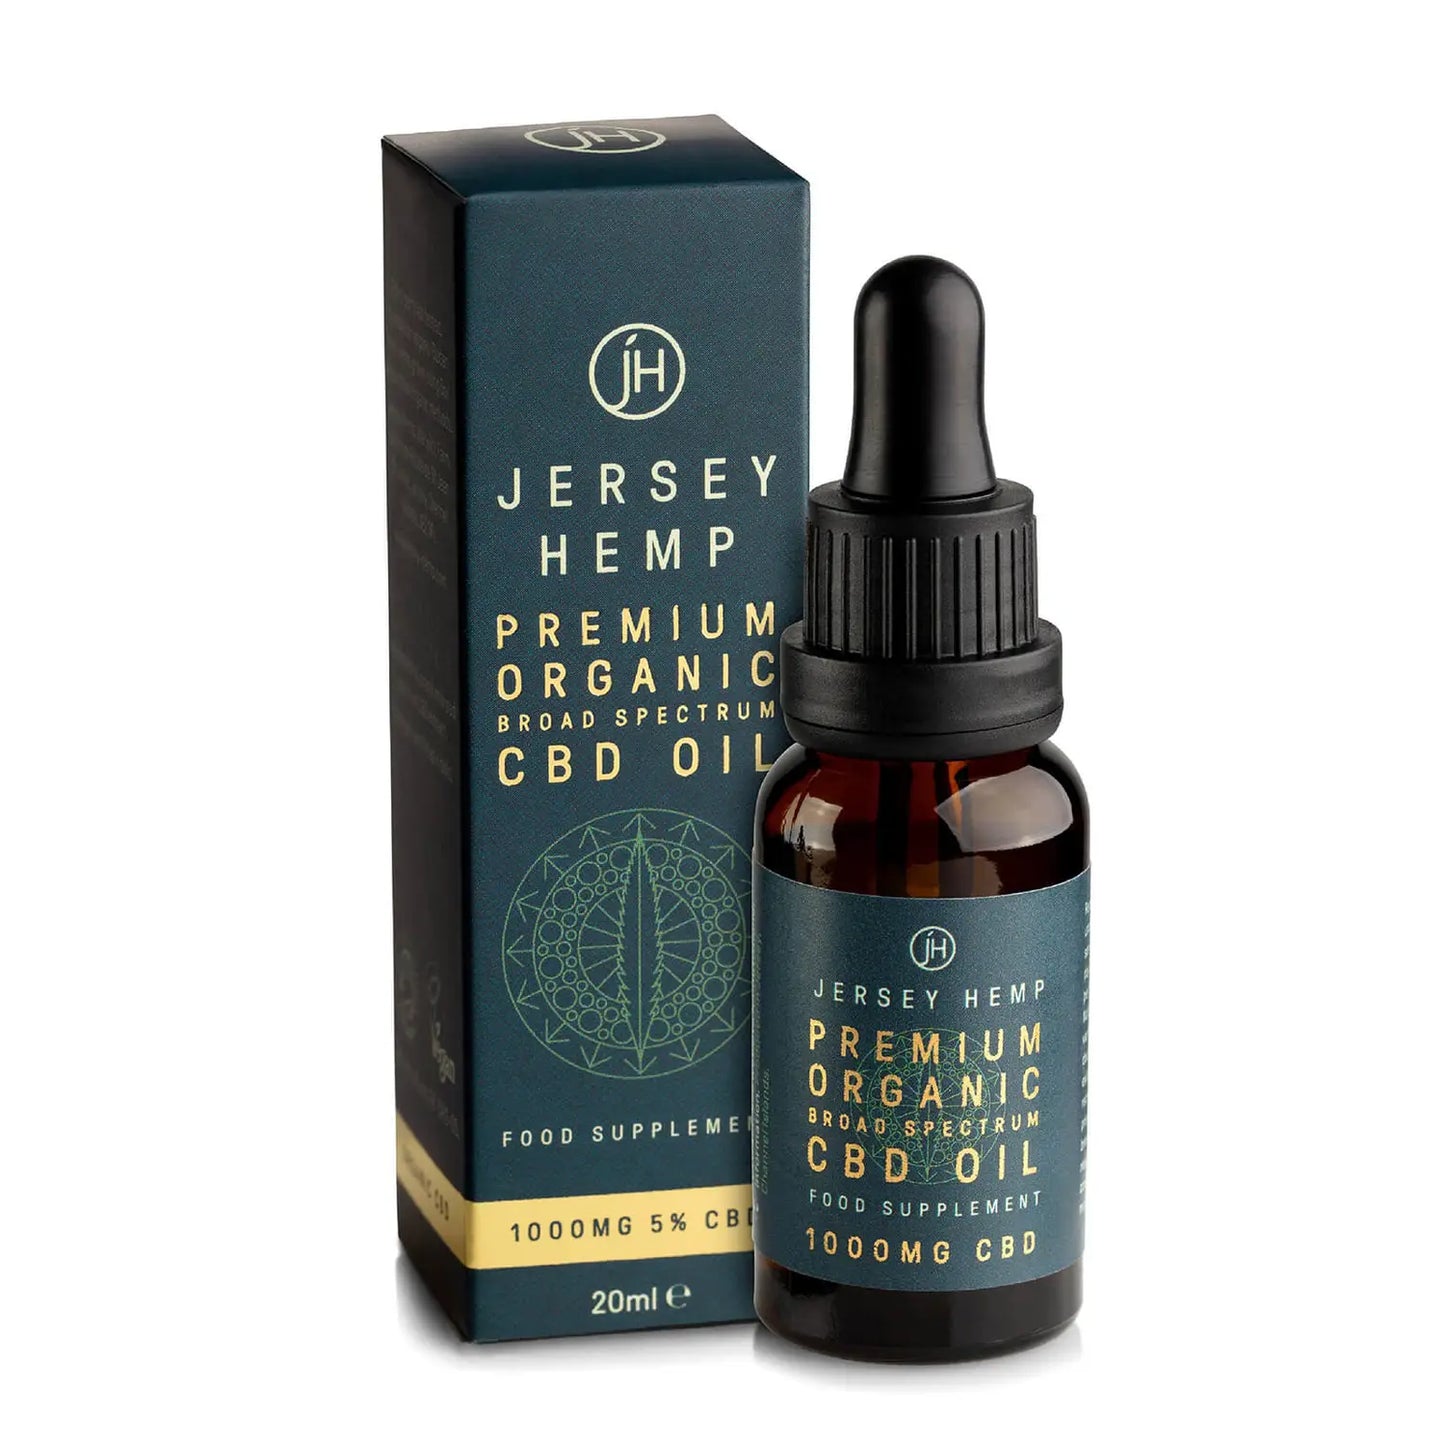 Jersey Hemp - CBD Oil, Broad Spectrum - 20ml Bottle